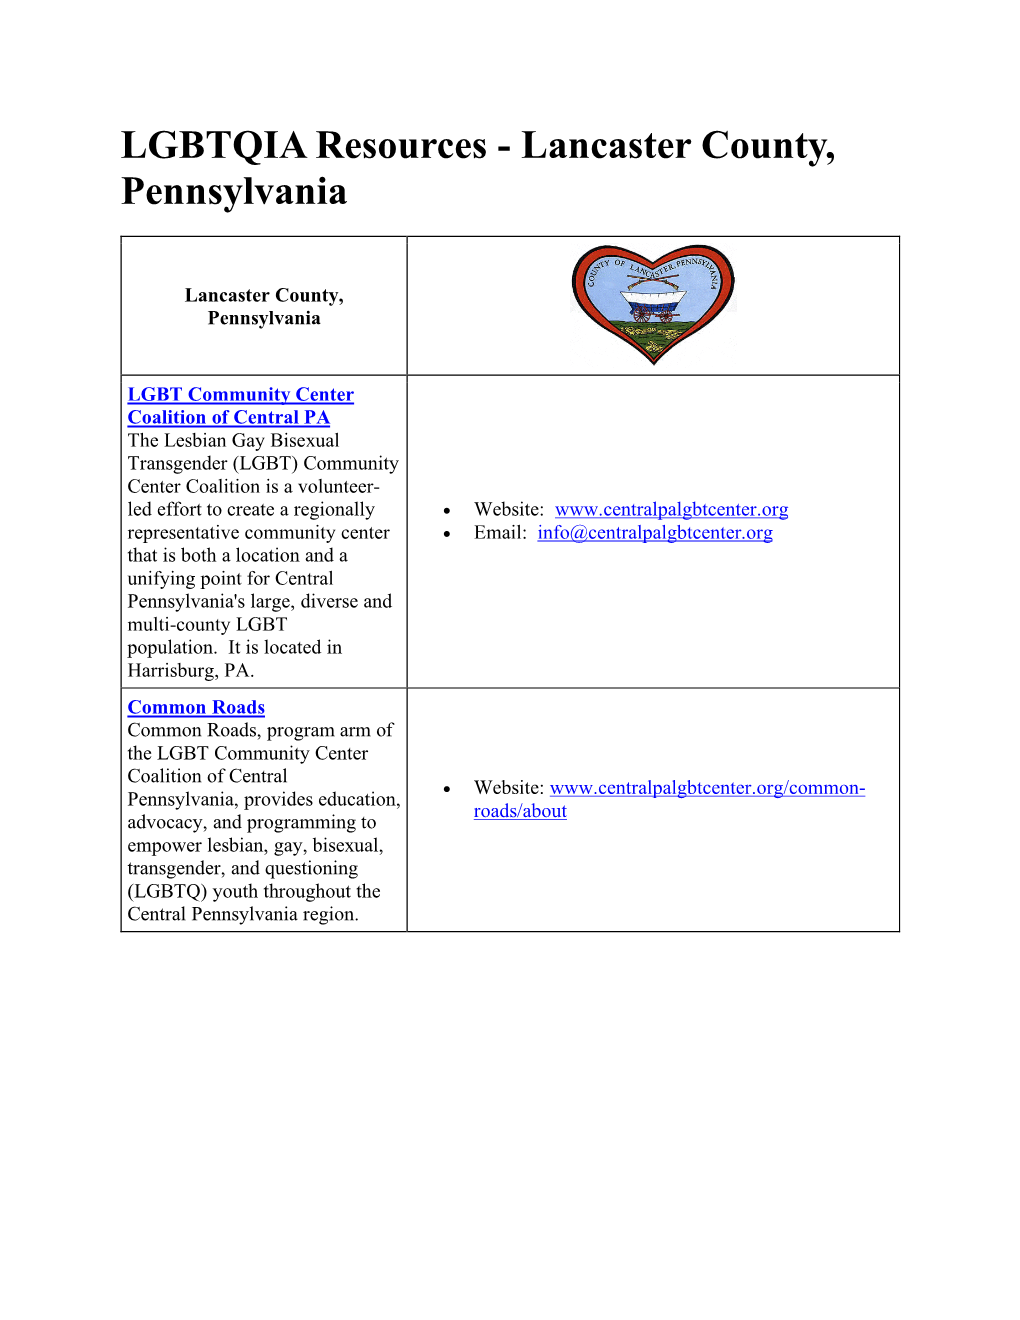 LGBTQIA Resources - Lancaster County, Pennsylvania